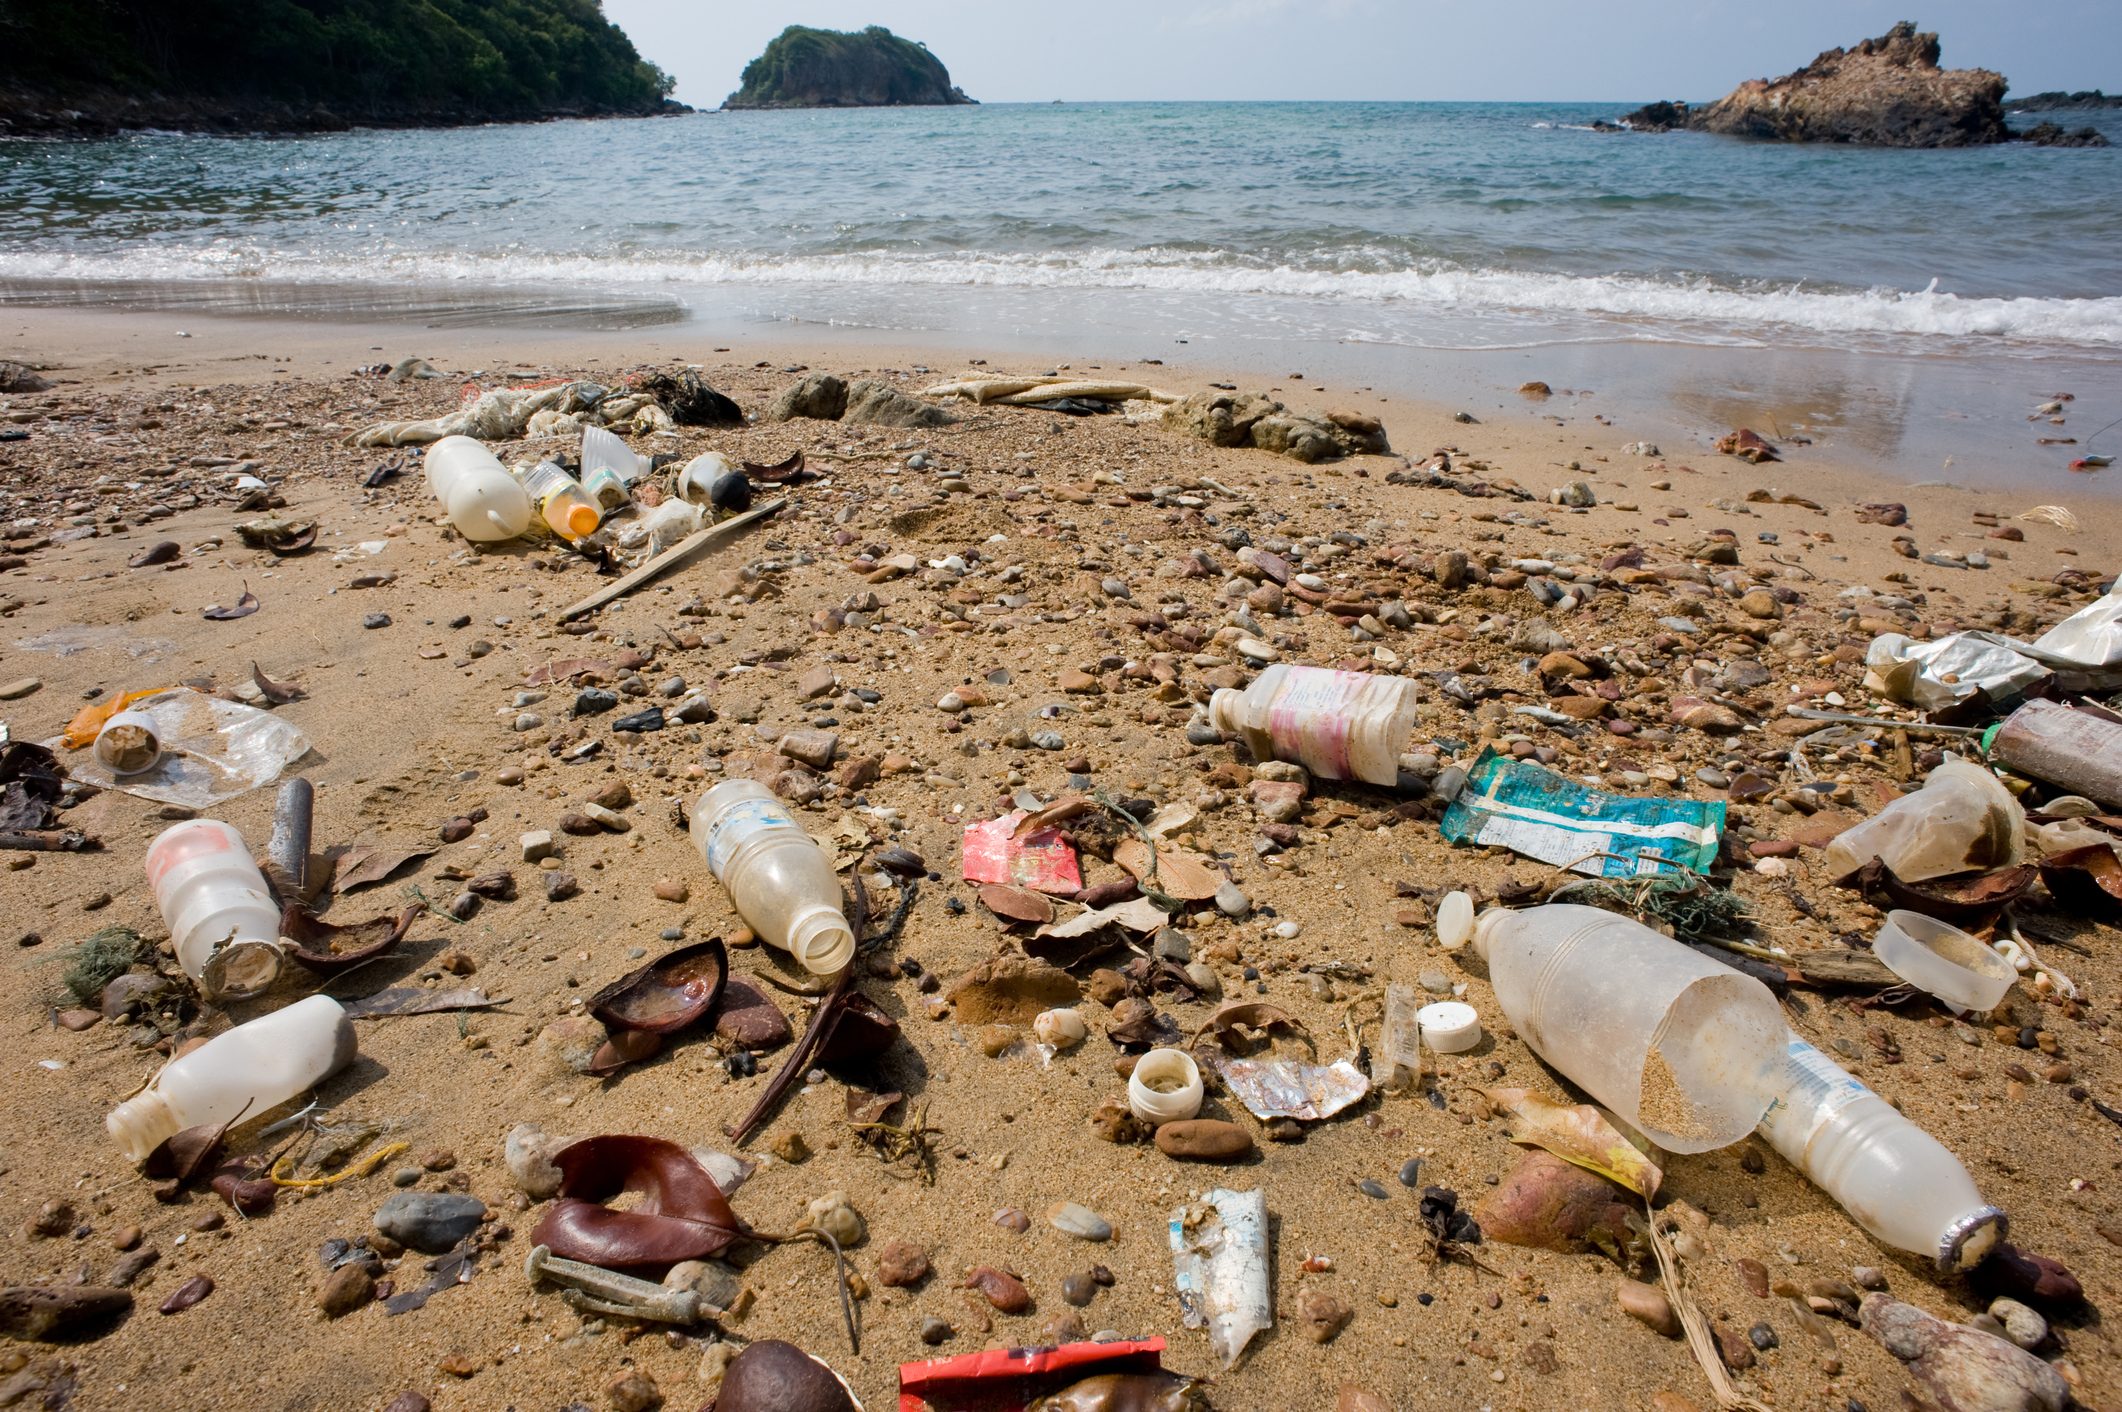 834 rifiuti ogni 100 metri di spiaggia, 84% plastica